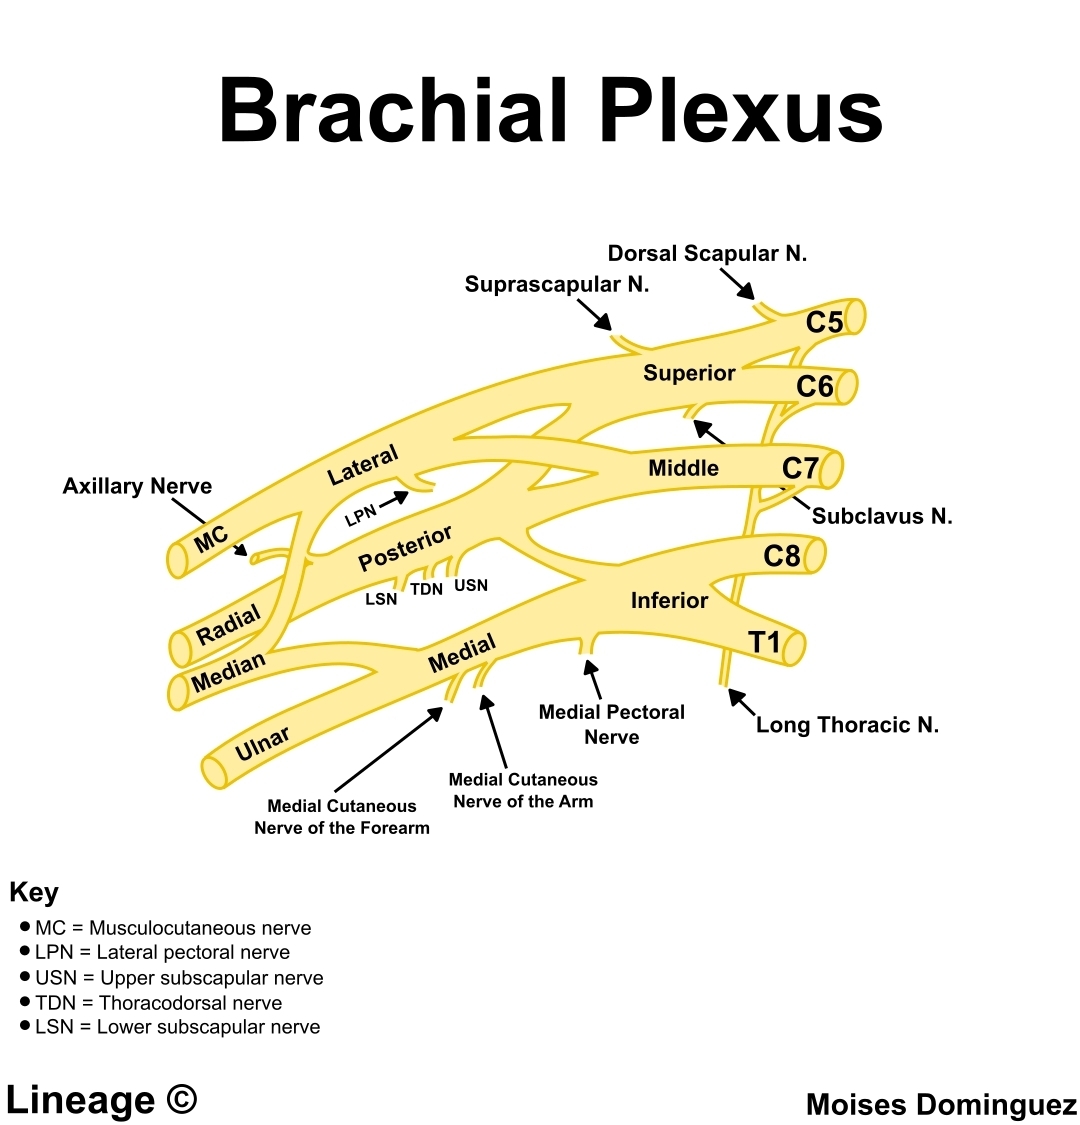  Plexul brahial- noțiuni de anatomie